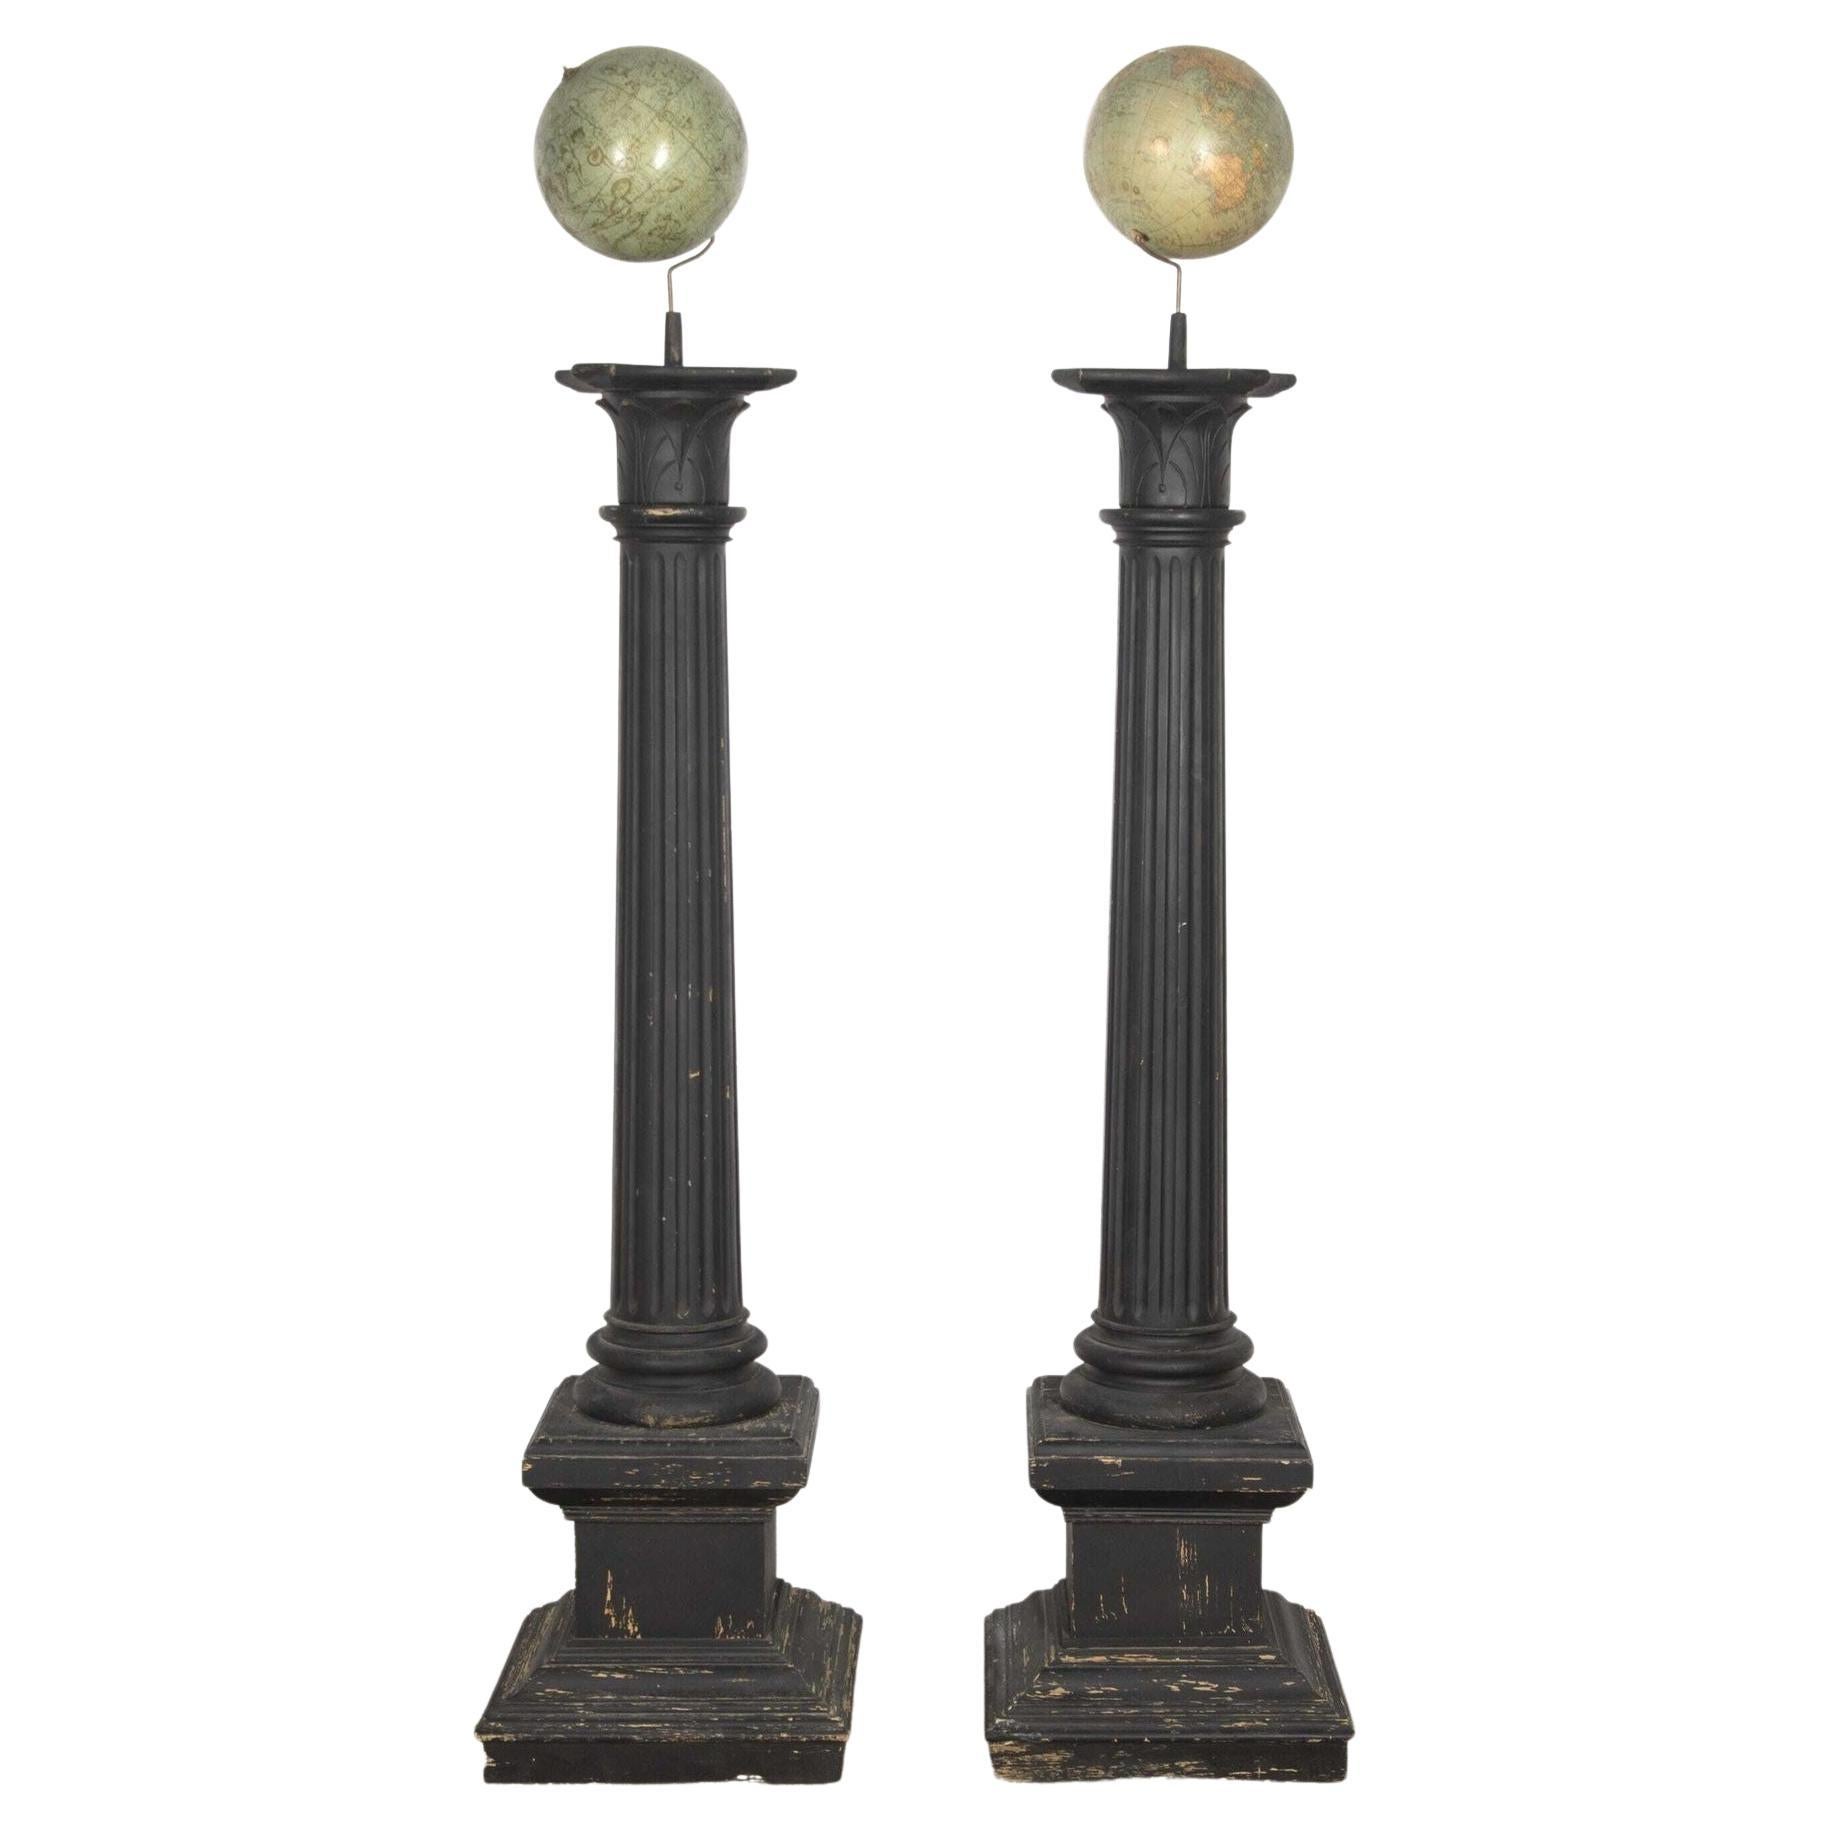 Pair of Globes on Columns